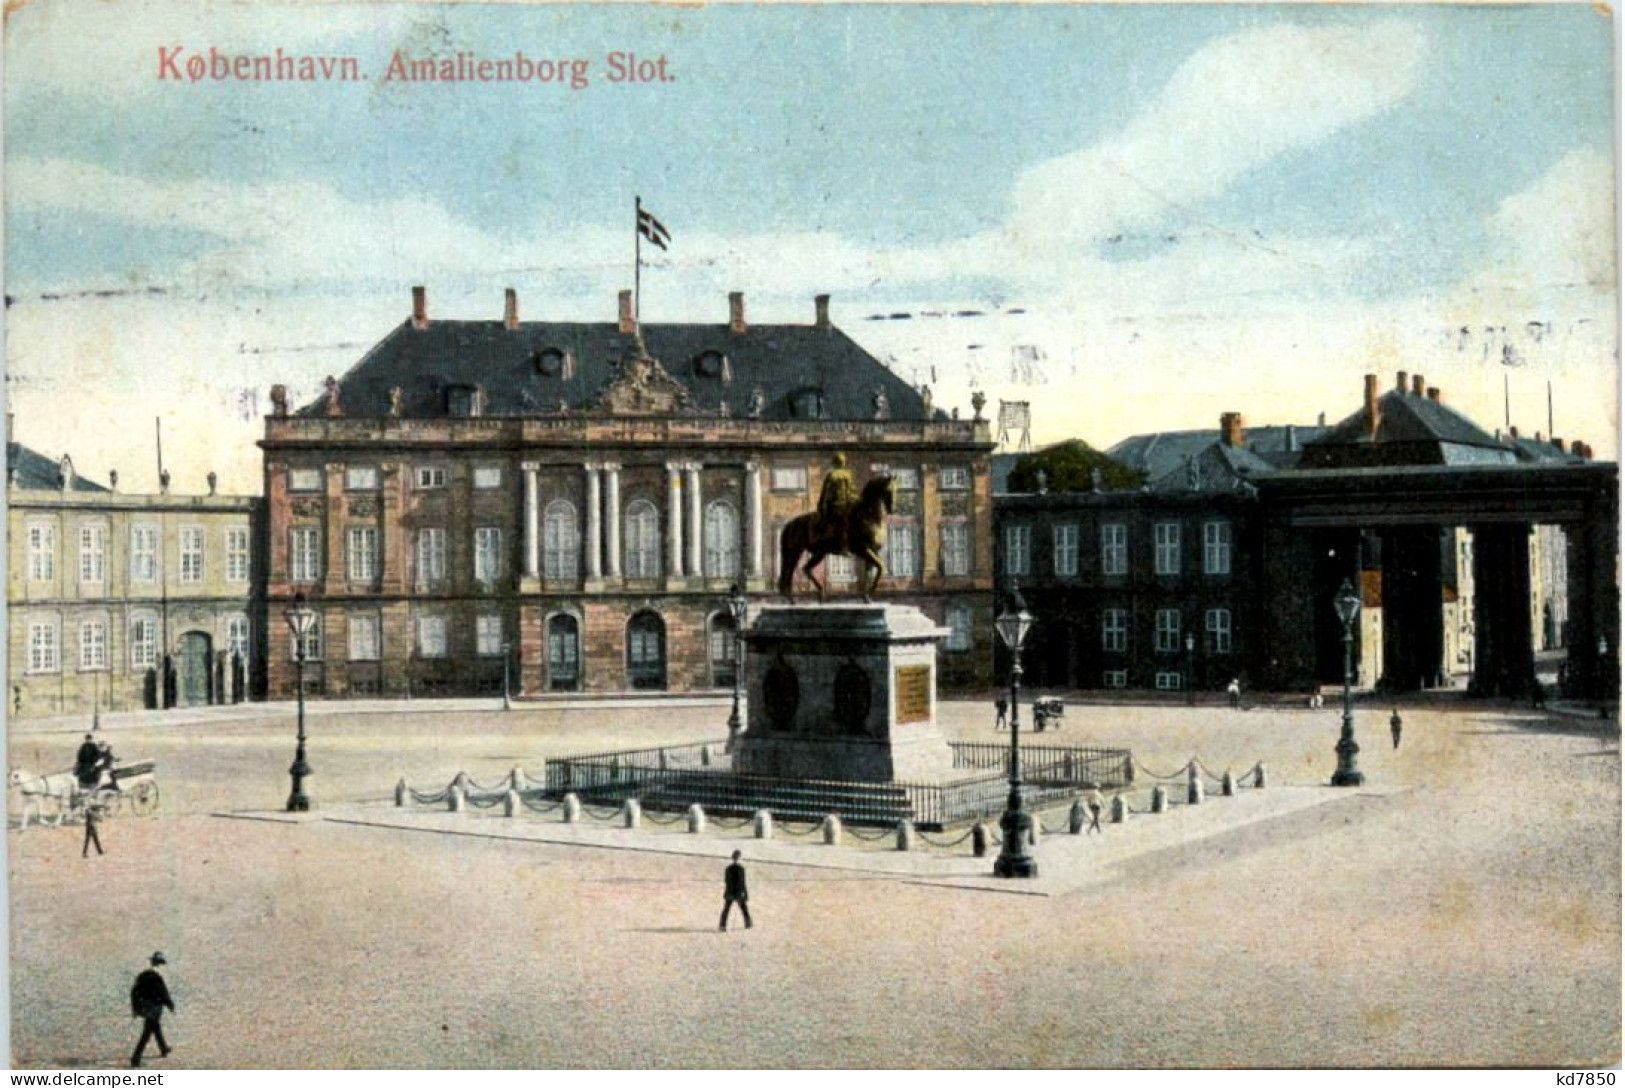 Kobenhavn - Amalienborg Slot - Denmark